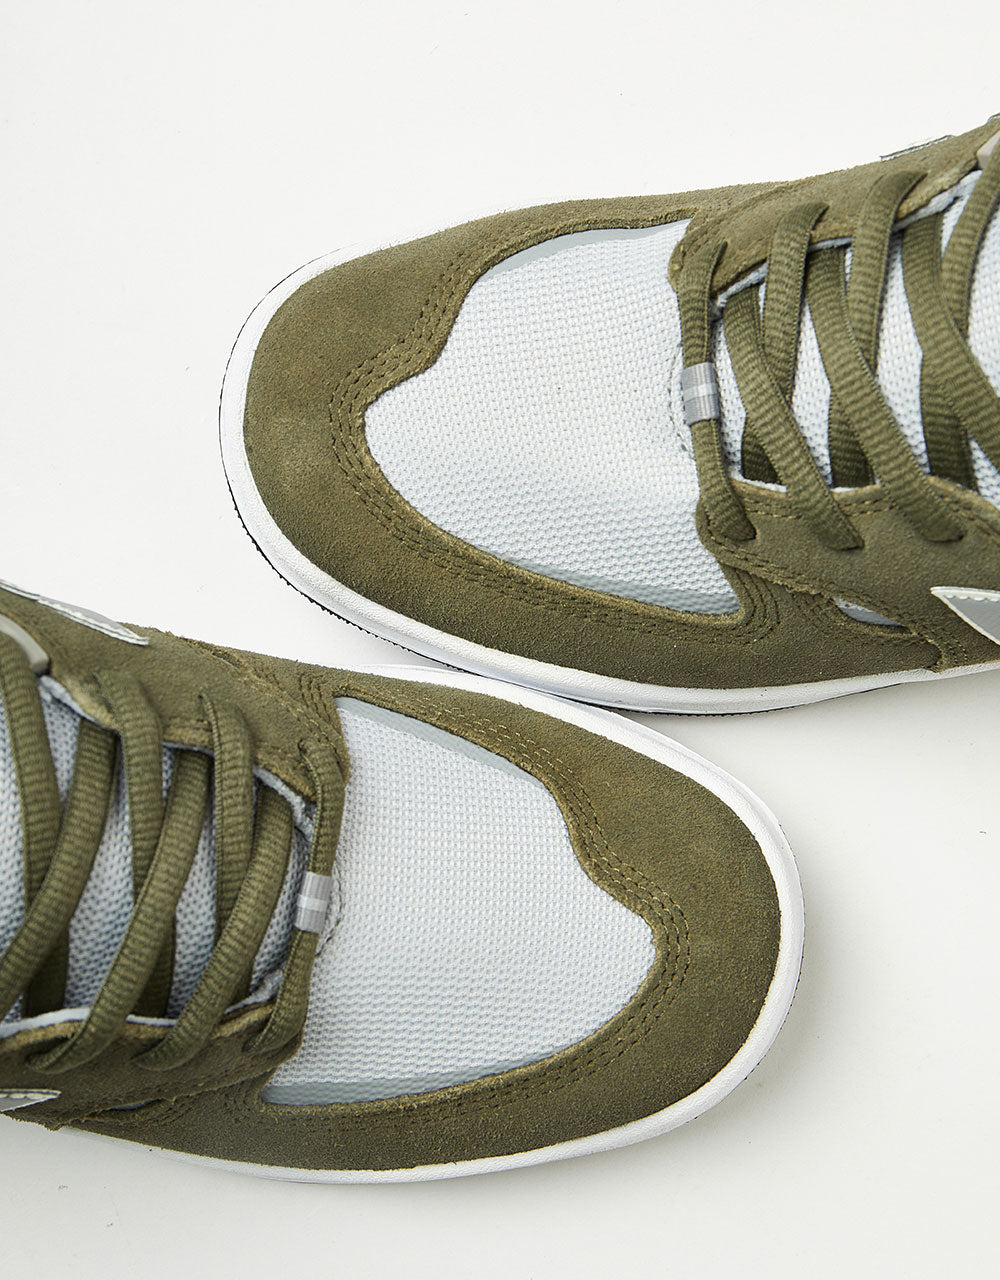 New Balance Numeric 1010 Skate Shoes - Olive/Grey